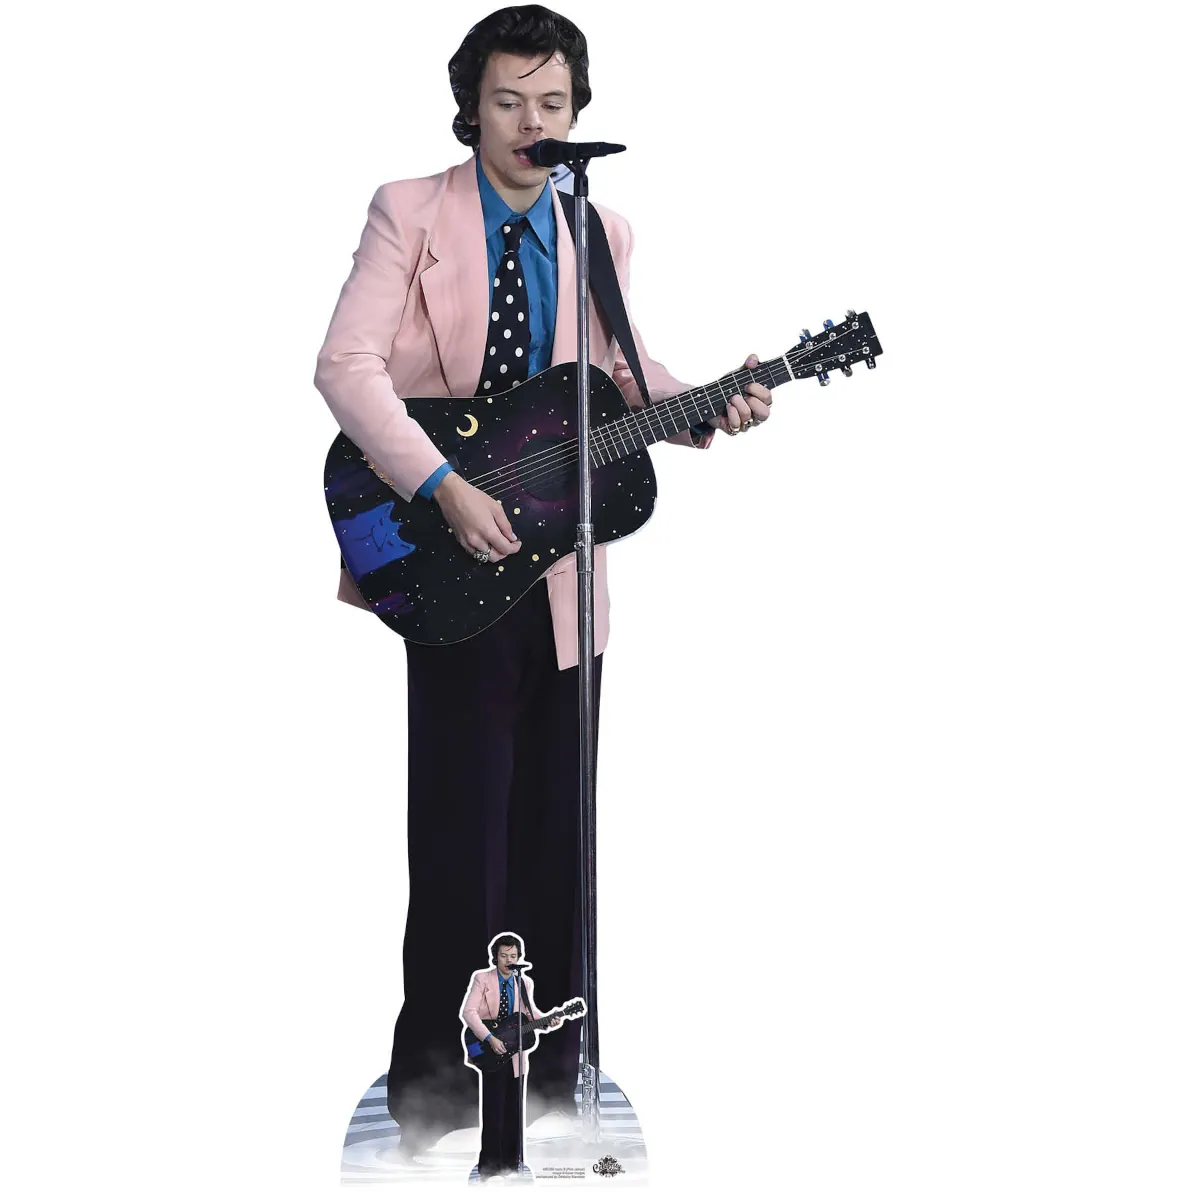 CS1026 Harry Styles 'Pink Shirt' (English Singer Songwriter) Lifesize + Mini Cardboard Cutout Standee Front